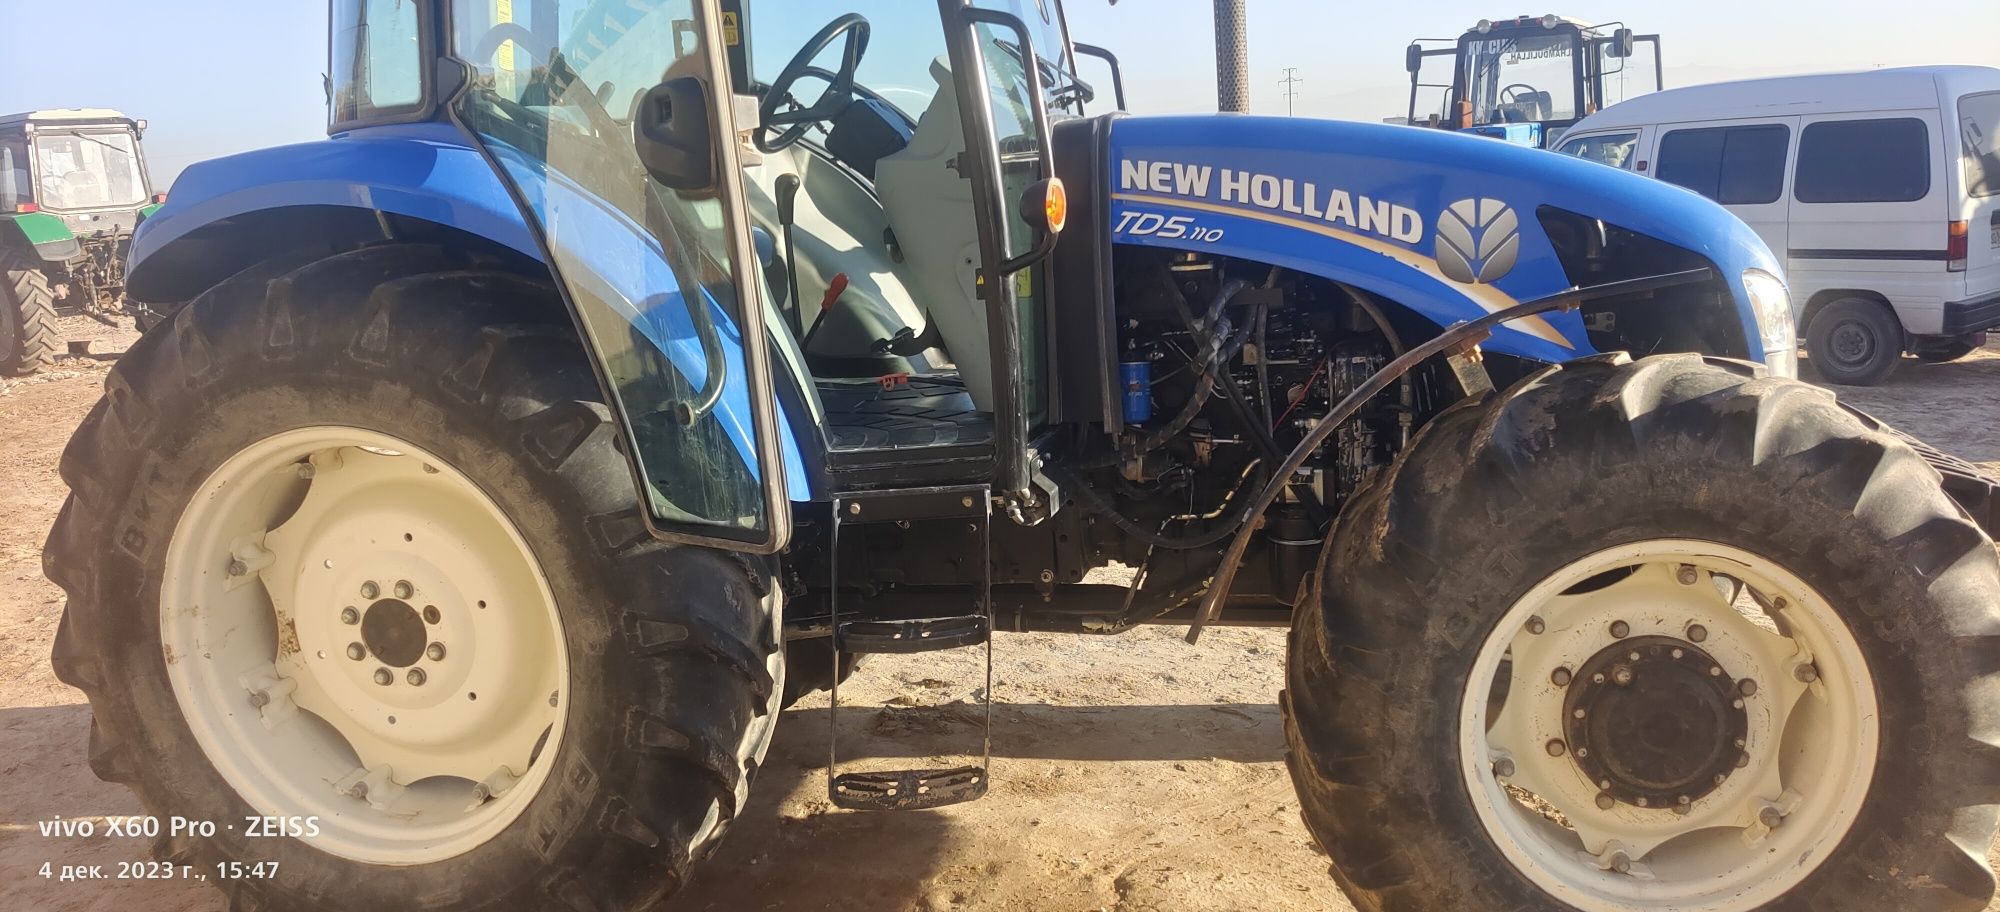 New Holland TD5 110 Трактор